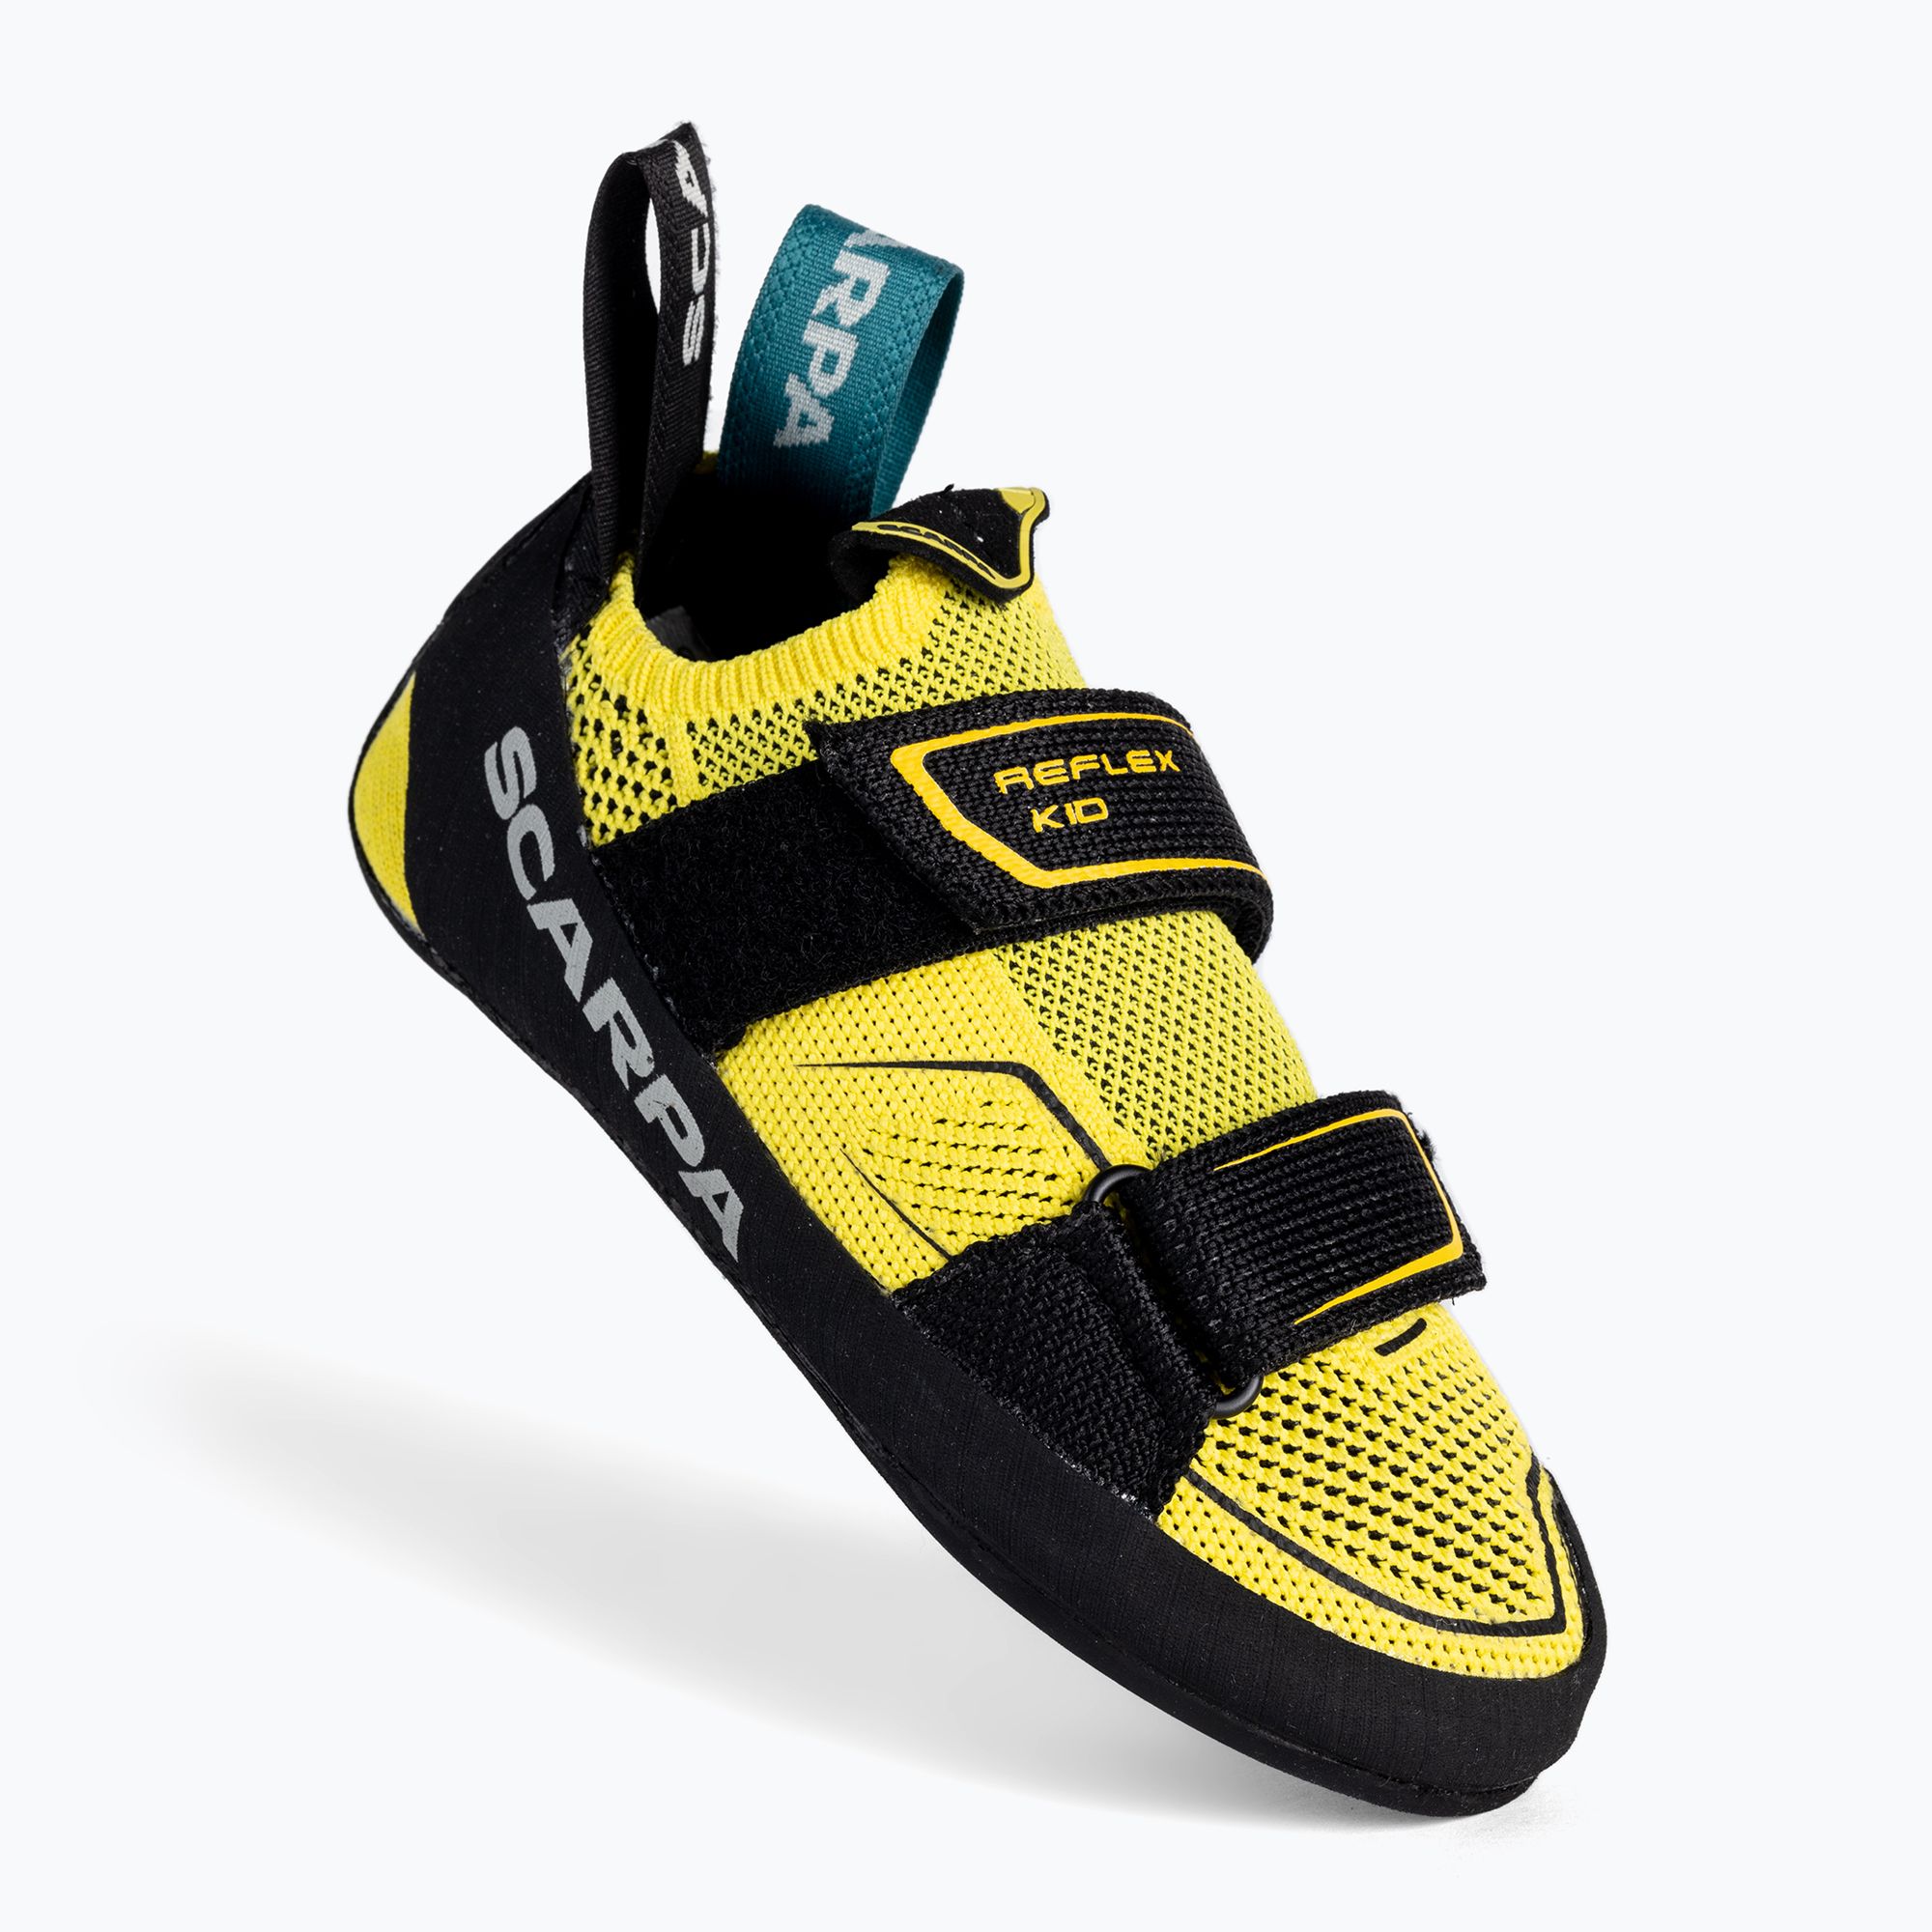 Journey proposition Sleet SCARPA Reflex Kid Vision pantofi de alpinism pentru copii galben-negru  70072-003/1 - Sportano.ro